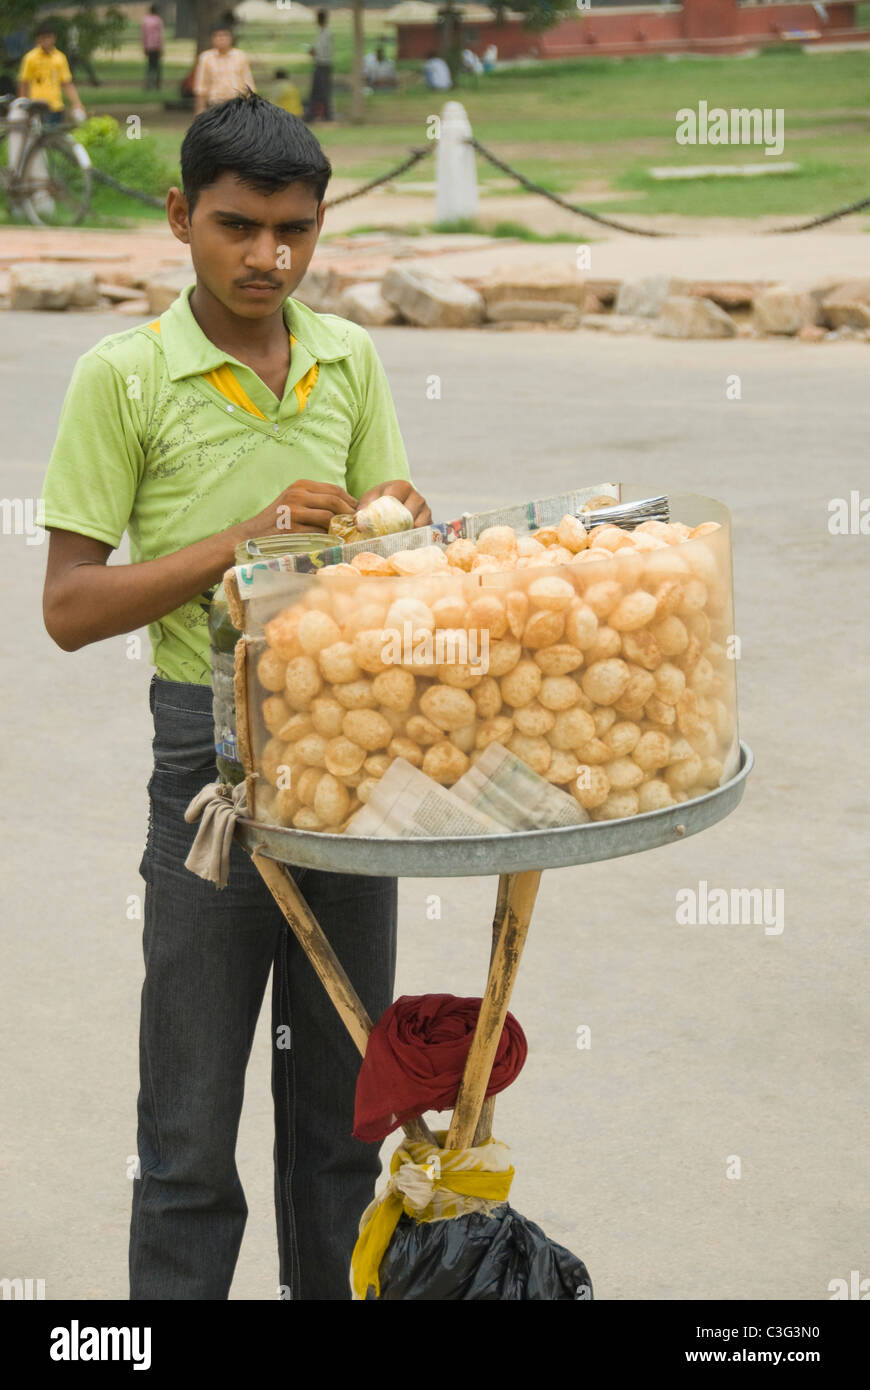 Vendor selling panipuri at a food stall, India Gate, New Delhi, India Stock Photo